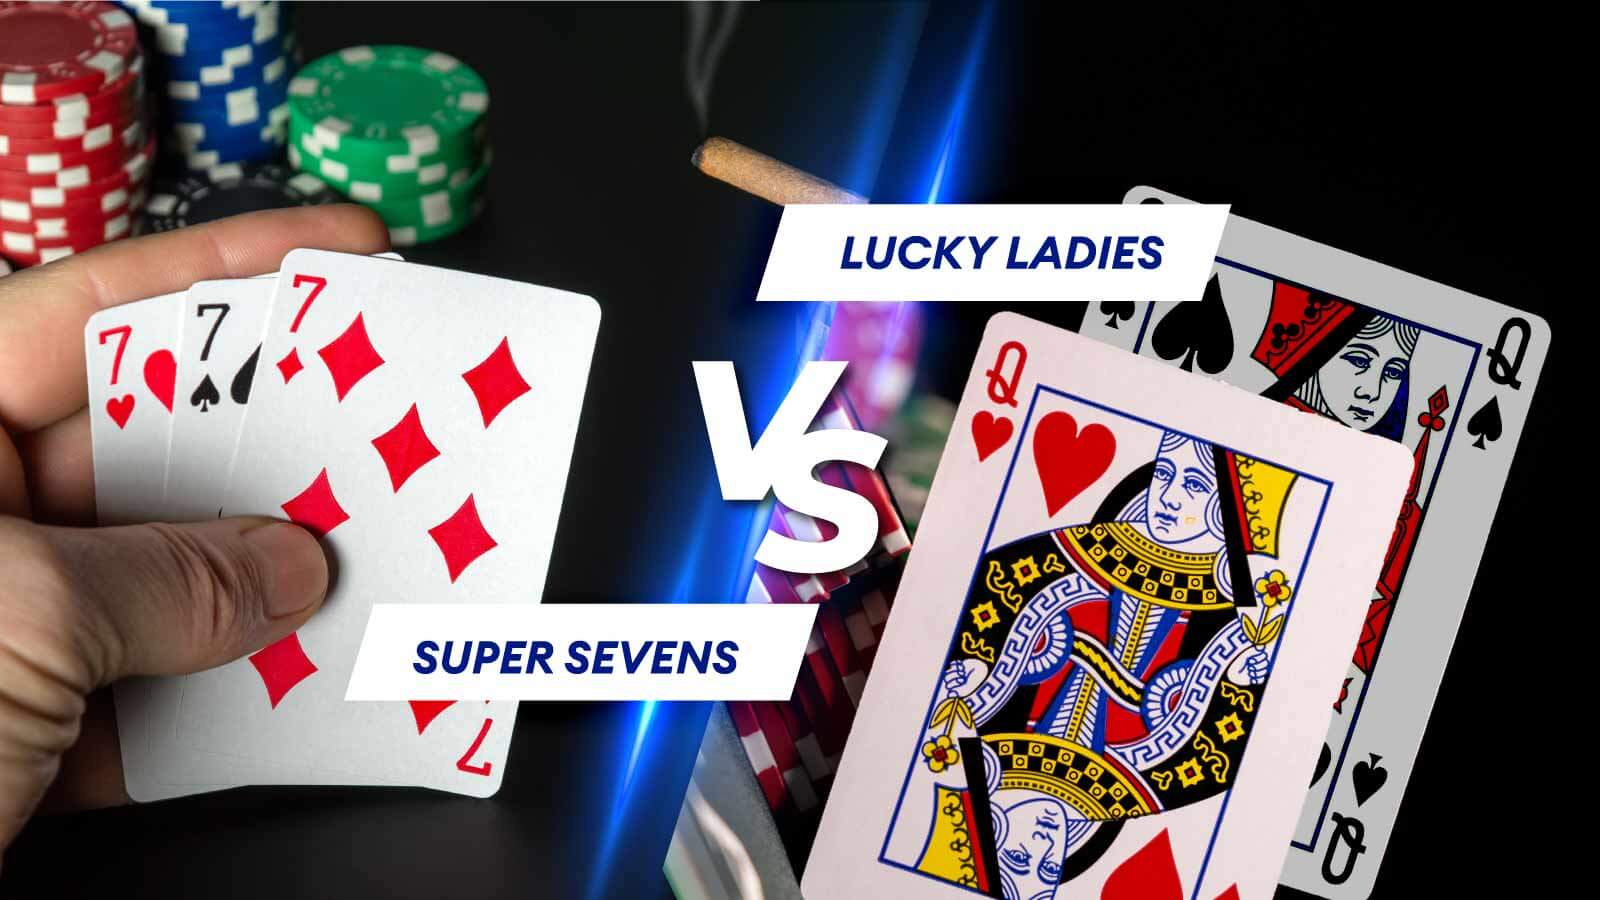 Super Sevens vs Lucky Ladies La Blackjack